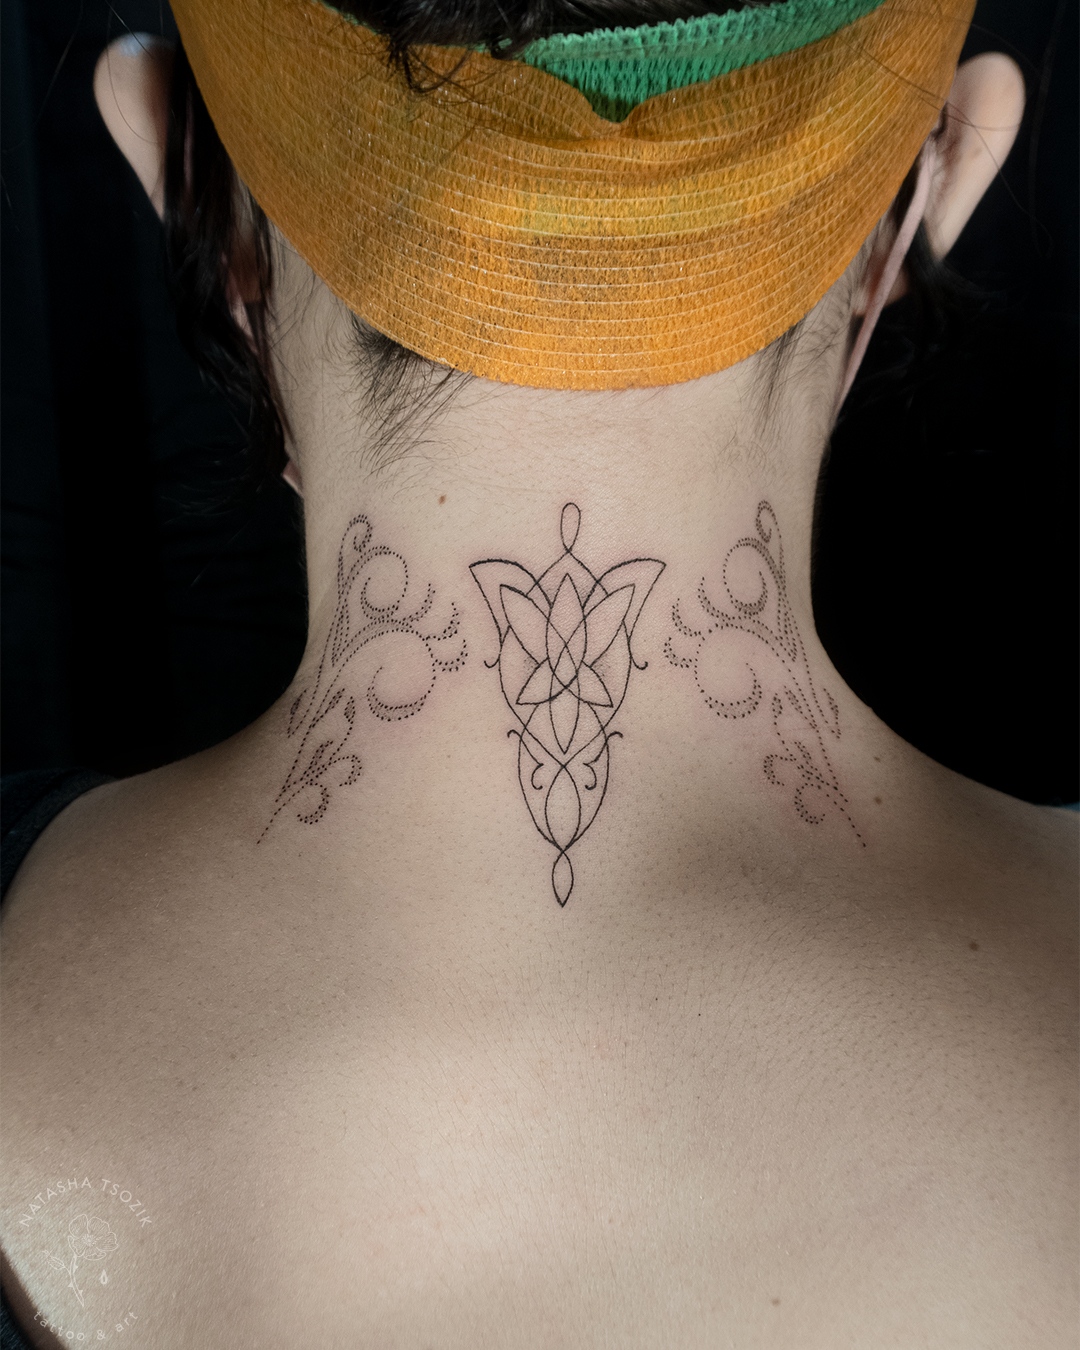 Neck tattoo by Natasha Tsozik